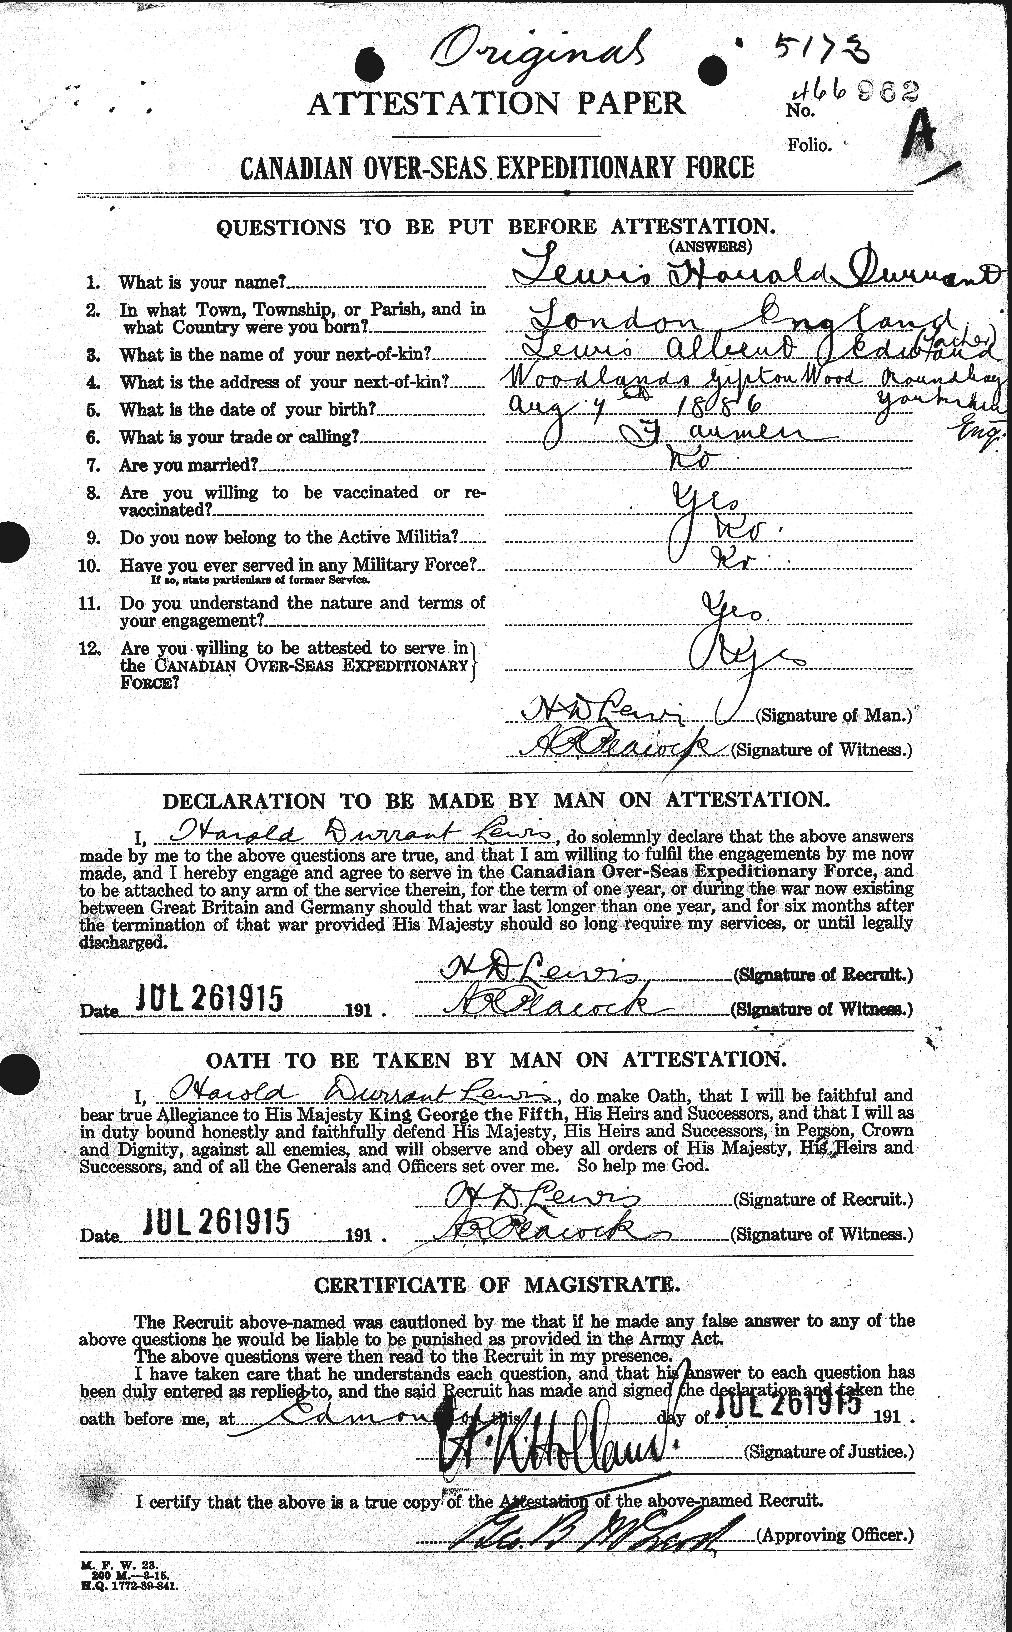 Attestation record: Harold Durant Lewis